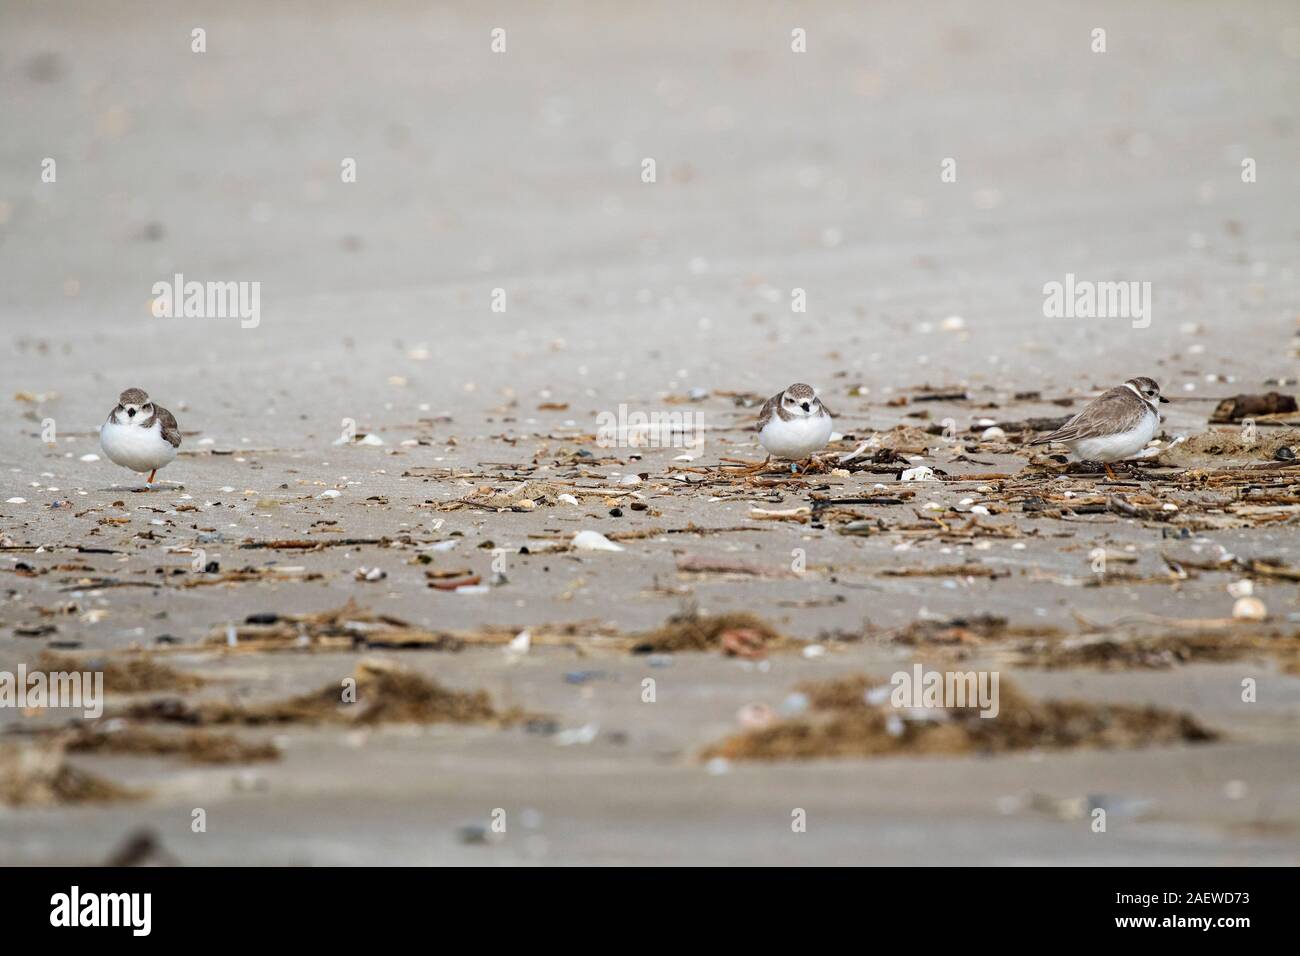 Piping plover Charadrius melodus resting on the beach at Bolivar Flats Shorebird Sanctuary, Bolivar Peninsula, Texas, USA, December 2017 Stock Photo